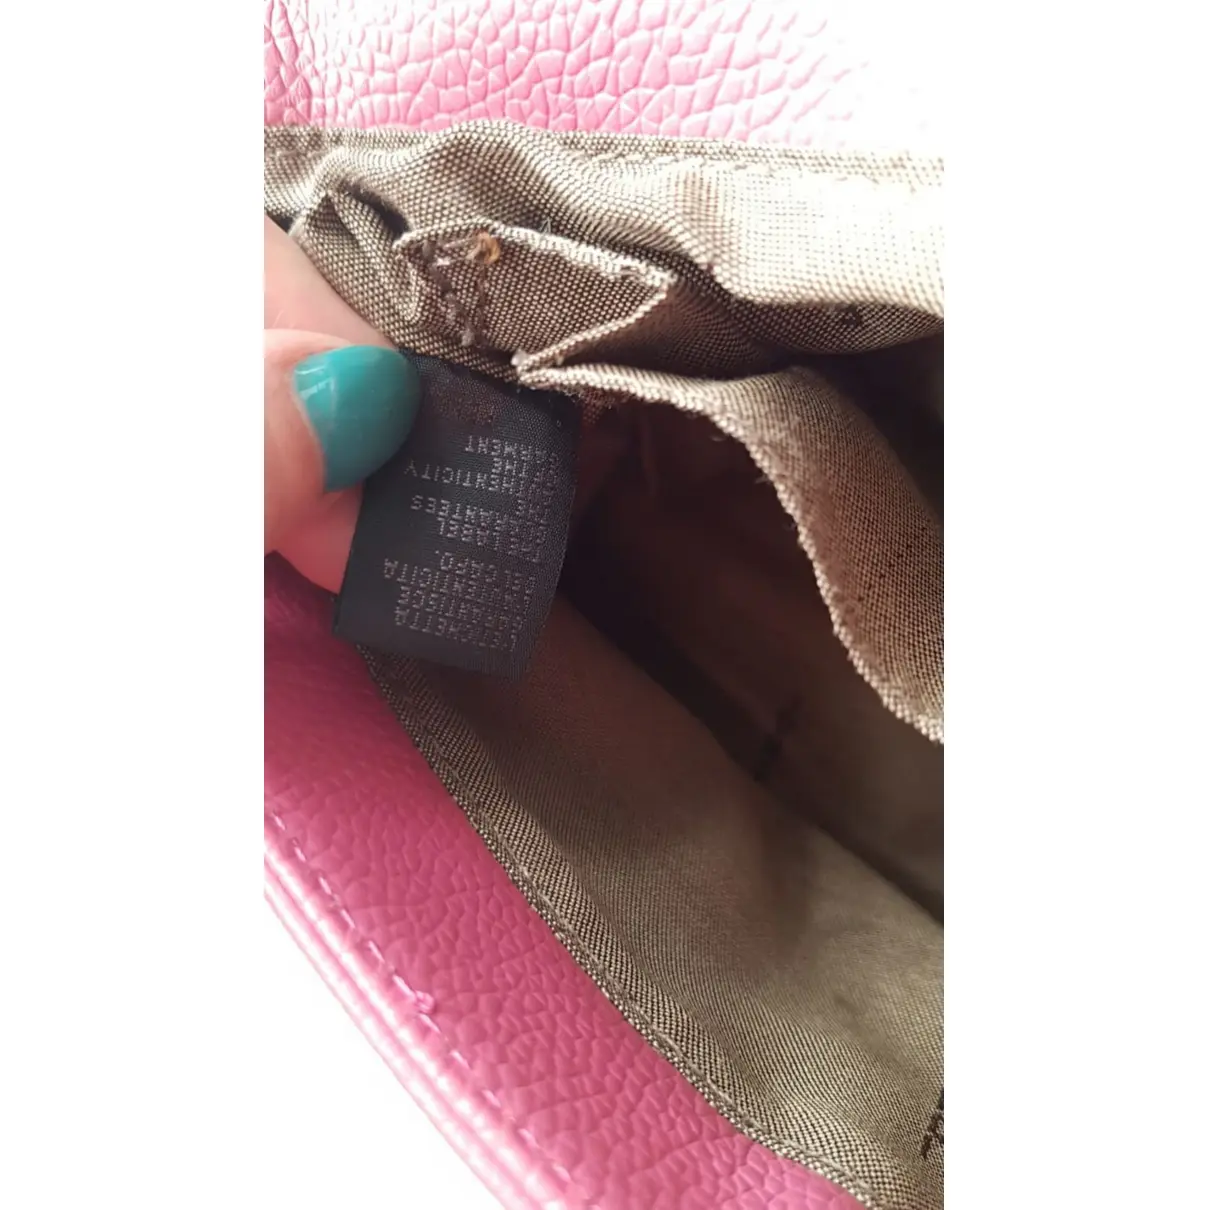 Buy Fendi Baguette leather crossbody bag online